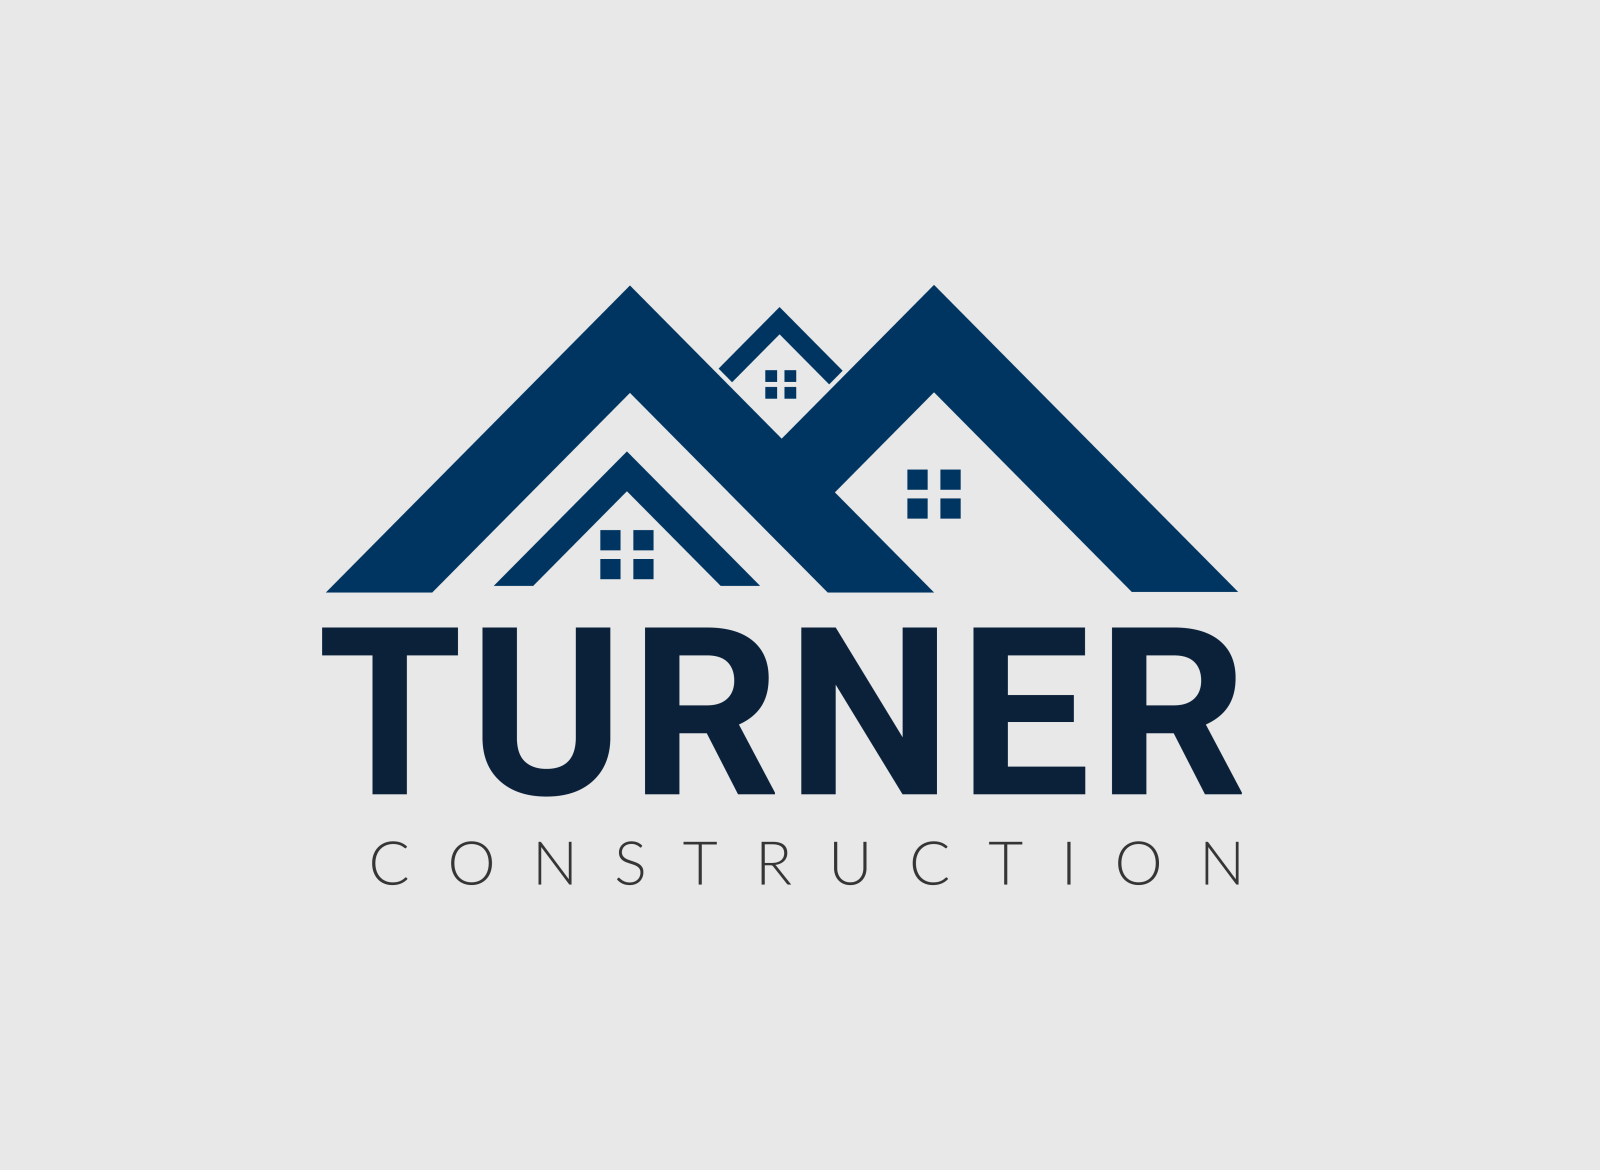 Turner Construction 01 by Anik Bhuiyan on Dribbble